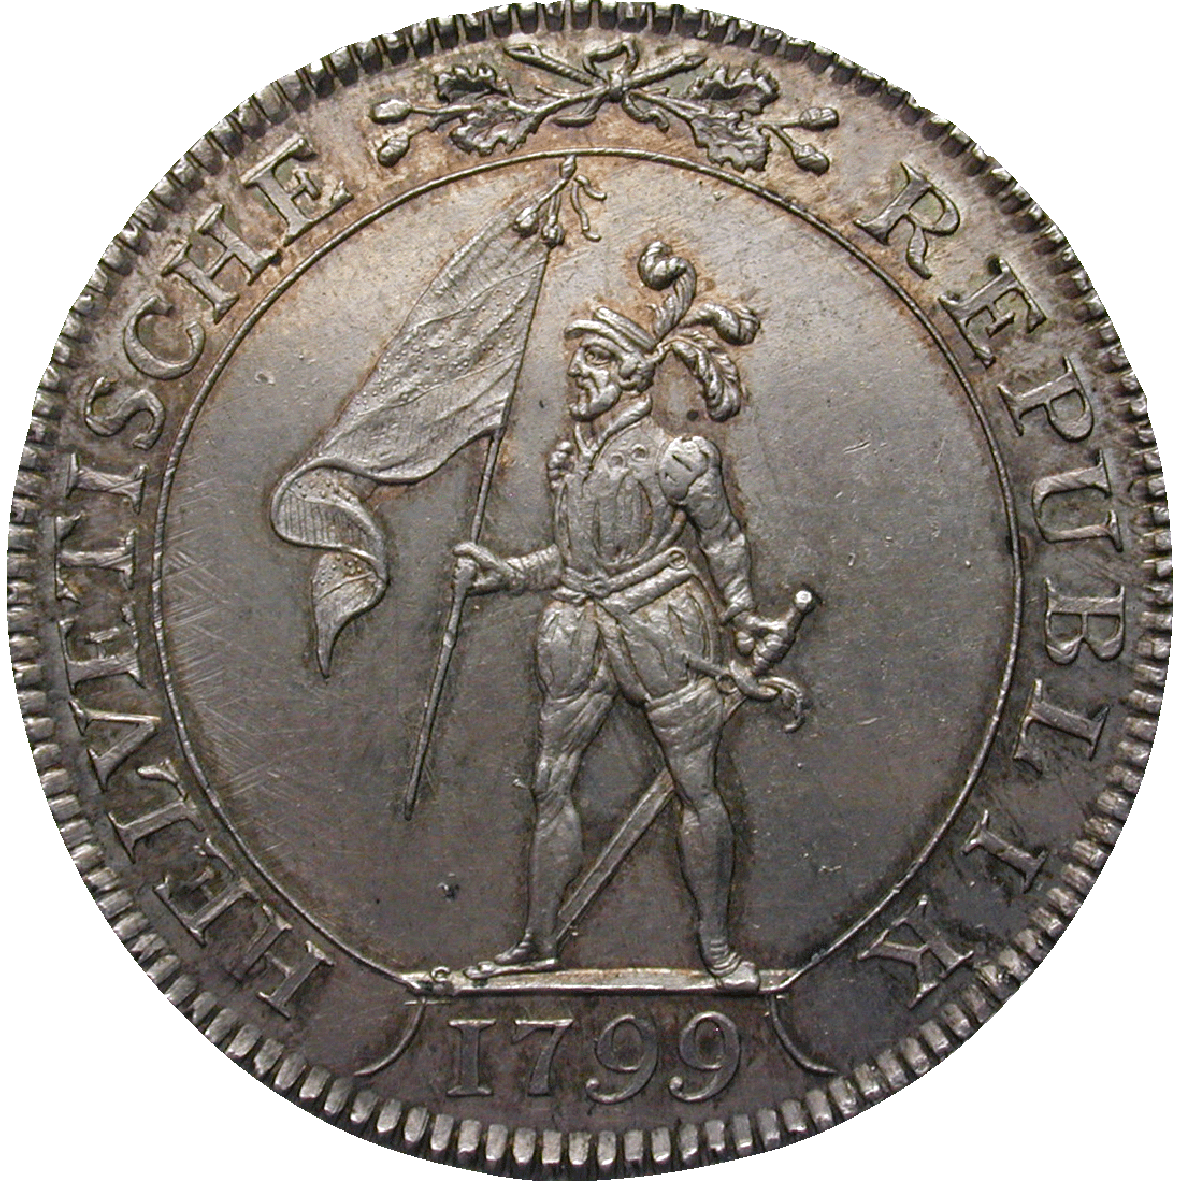 Helvetic Republic, 4 Francs 1799 (obverse)